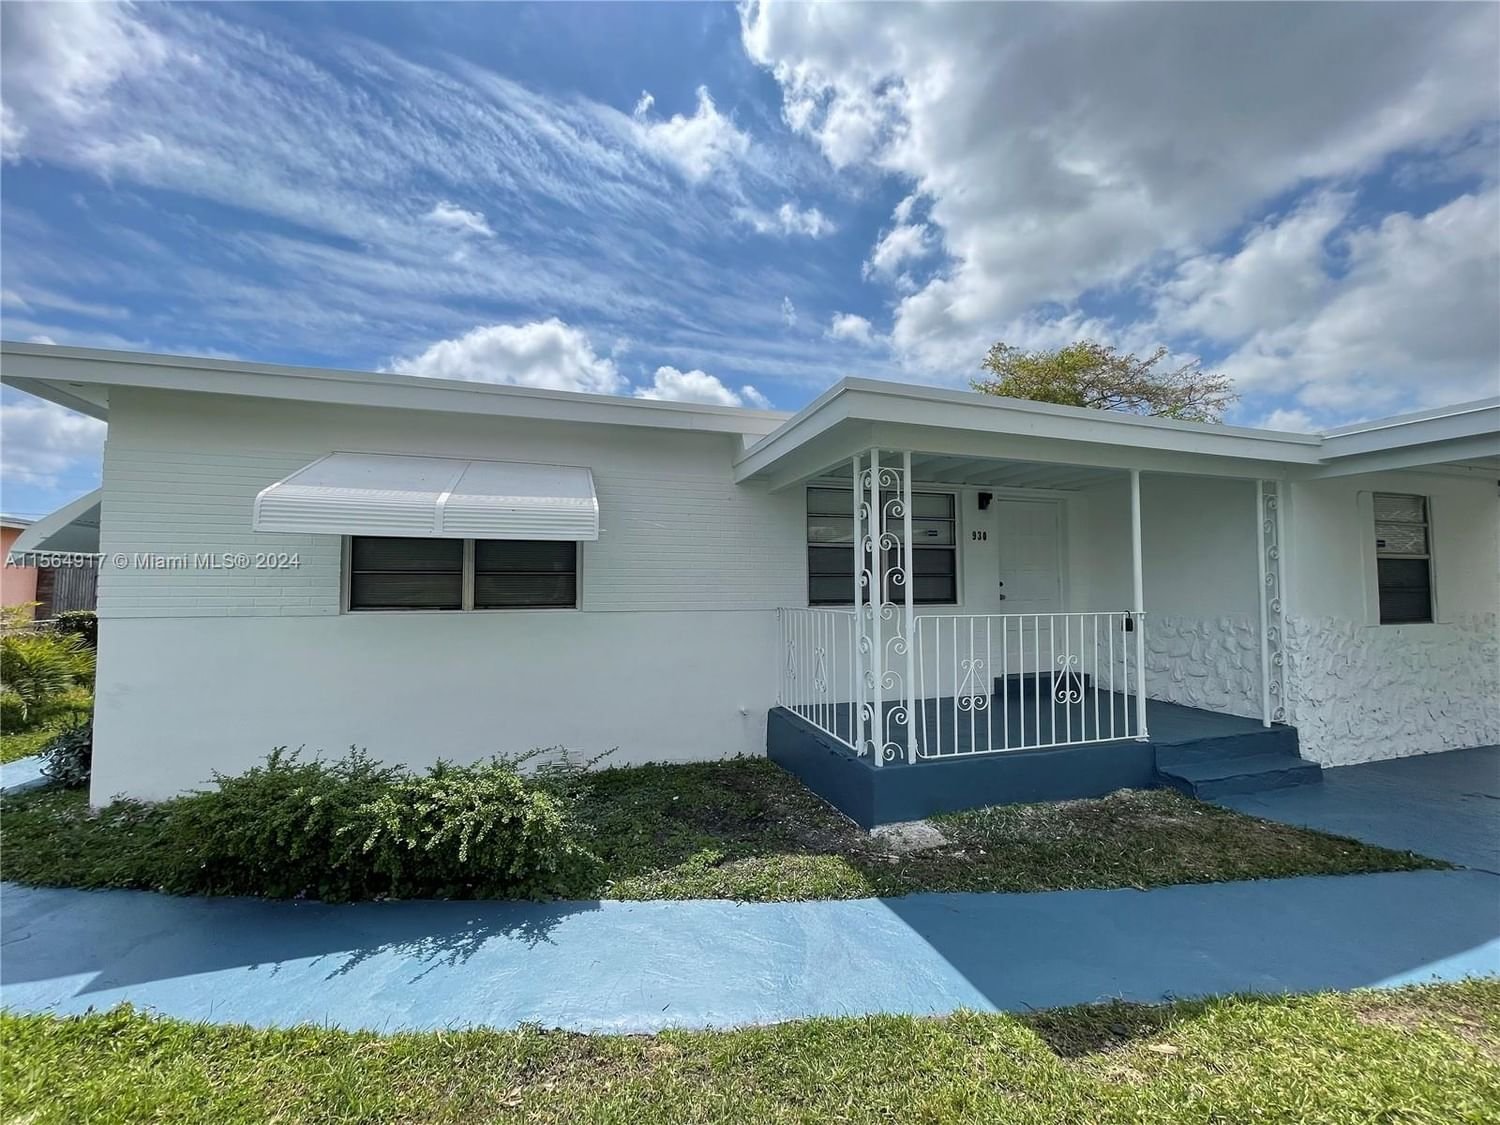 Real estate property located at 930 Burlington St, Miami-Dade County, OPA LOCKA PL NO 3, Opa-Locka, FL